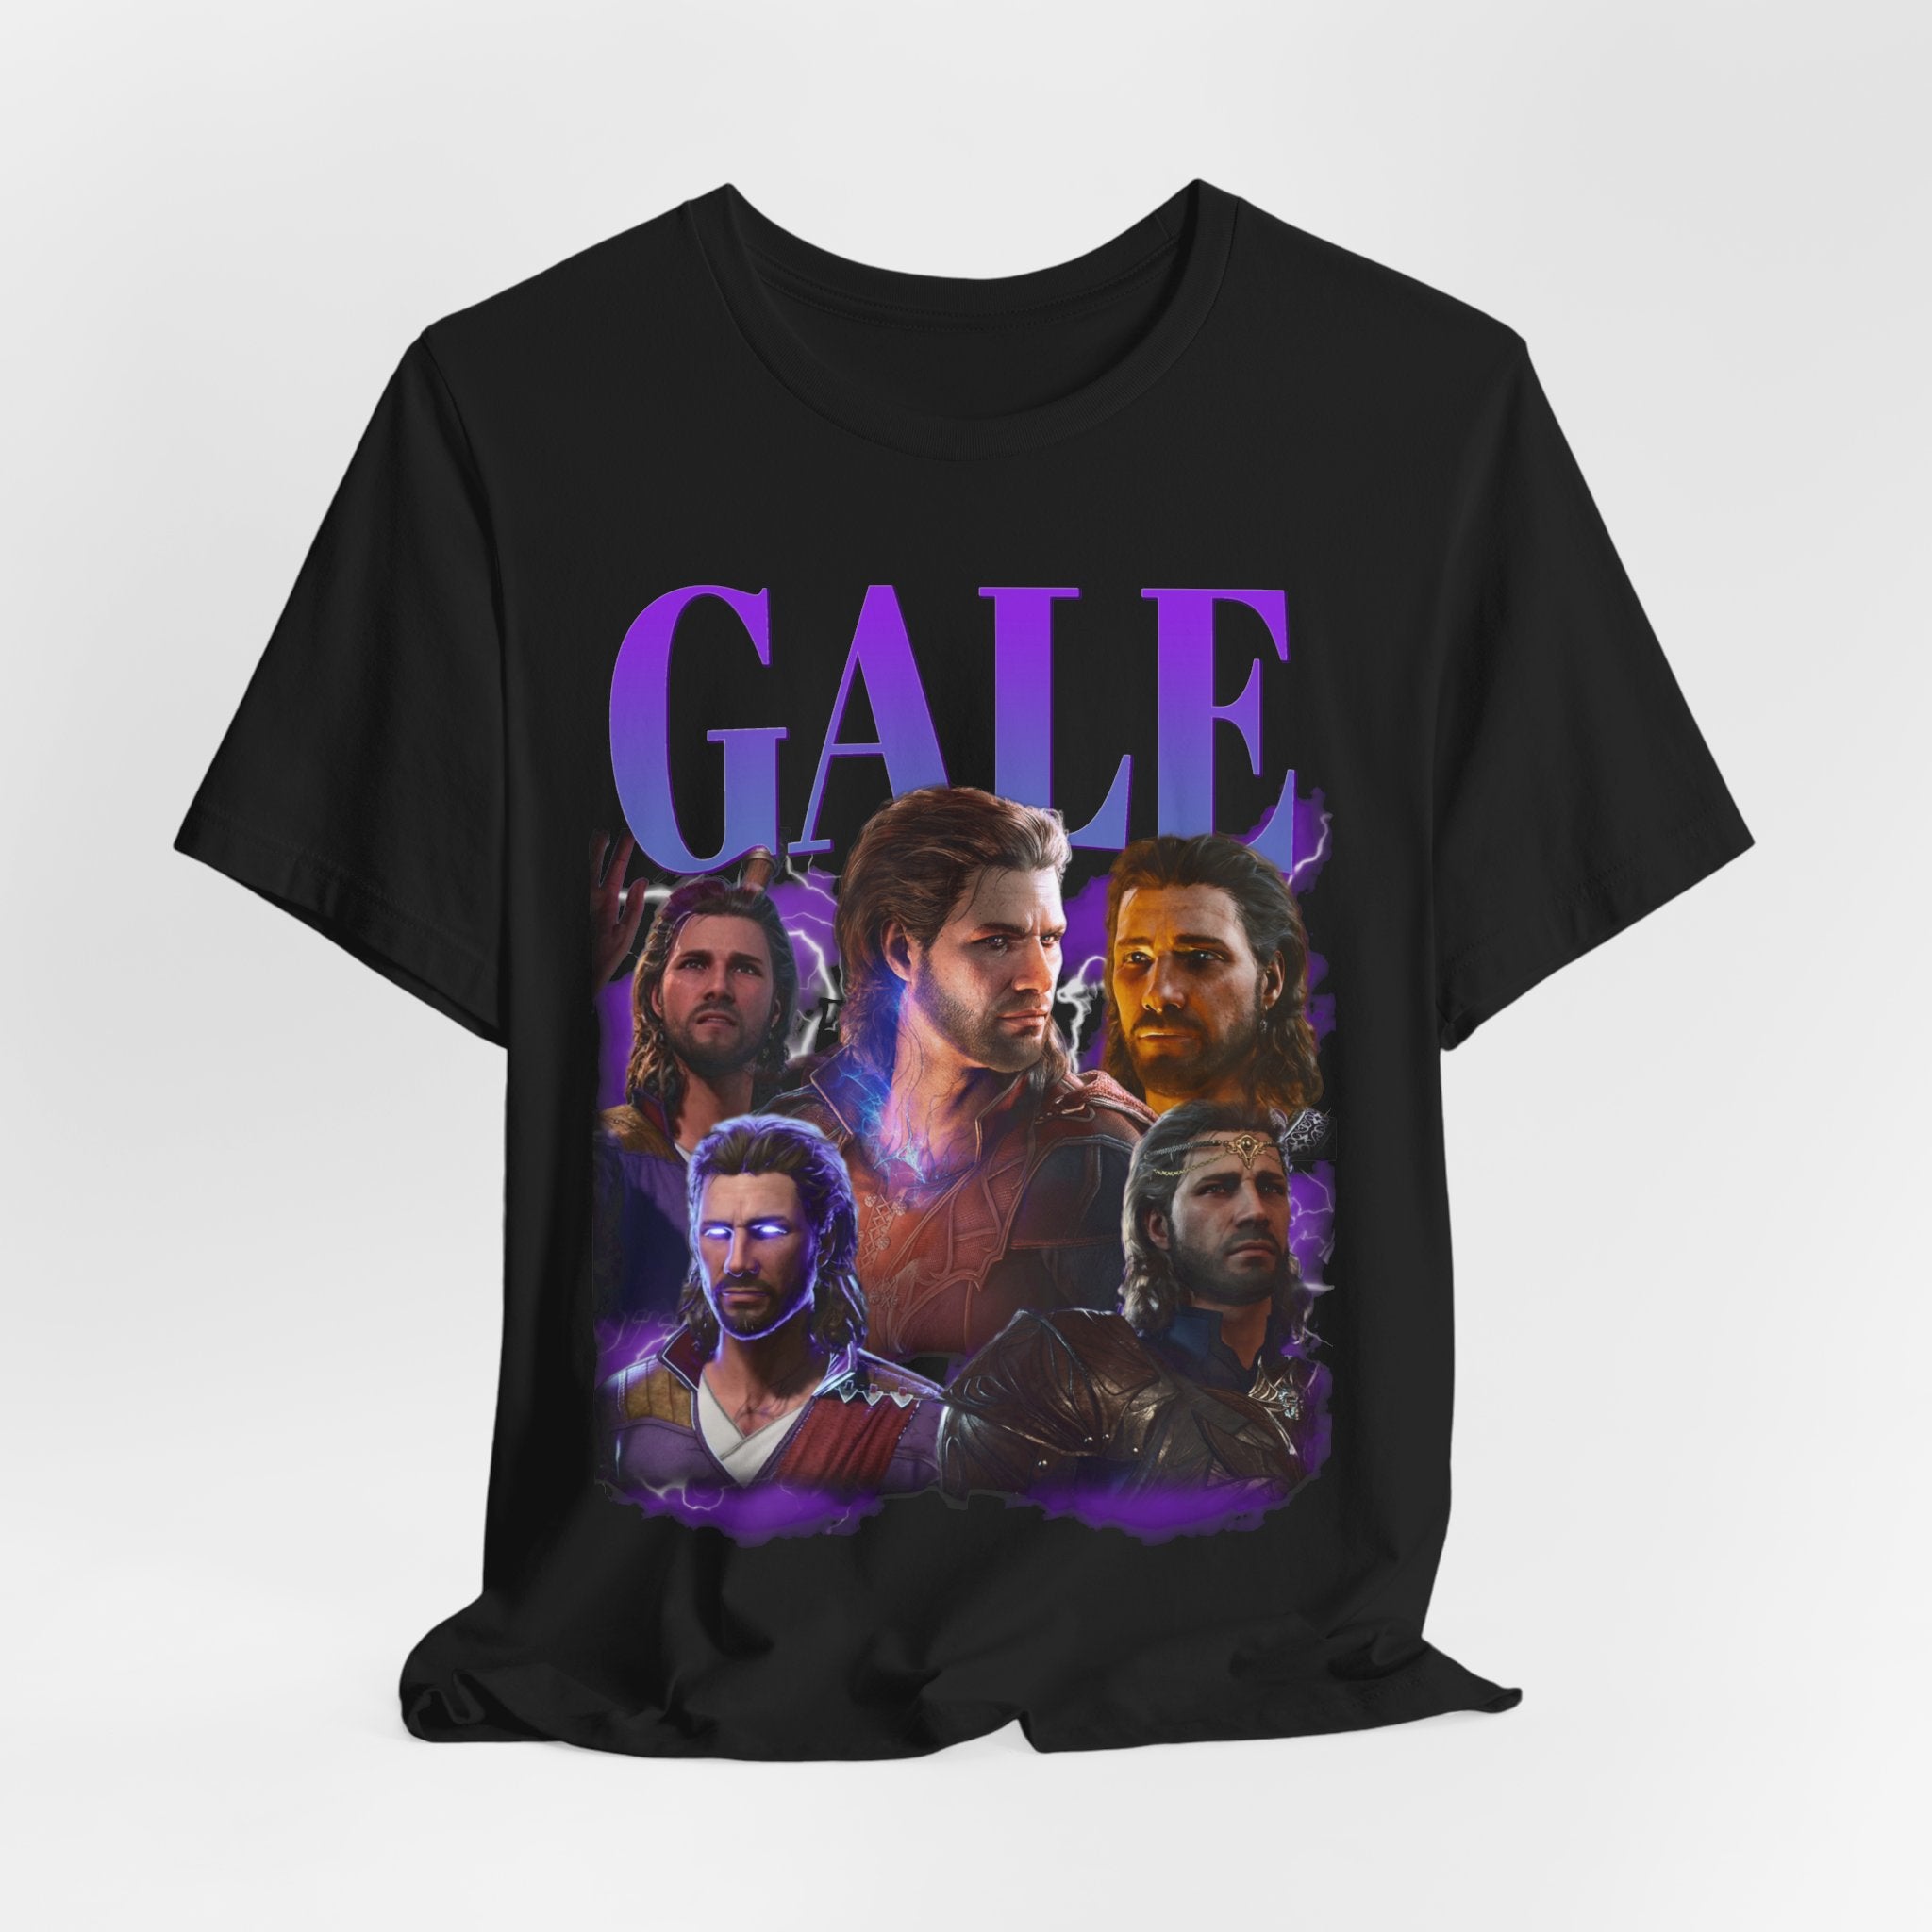 Gale T-Shirt | BG3 Inspired Shirt, Gift for Gamers, Gaming Shirt, Nerdy Gift, RPG Gamer T-Shirt